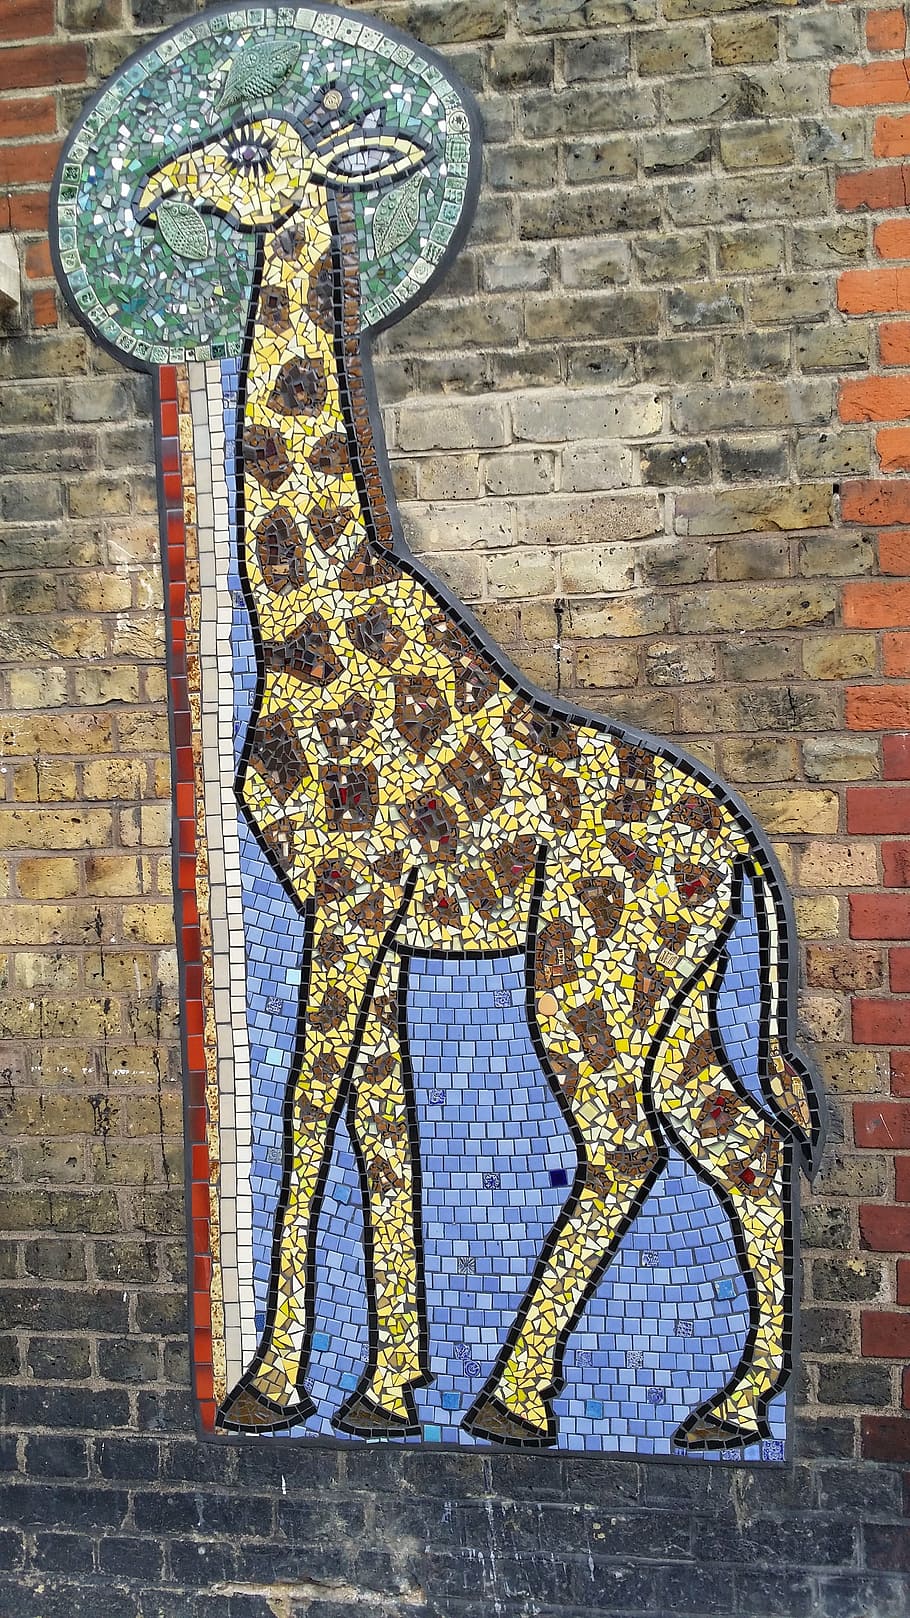 giraffe, mosaic, mural, wall, representation, art and craft